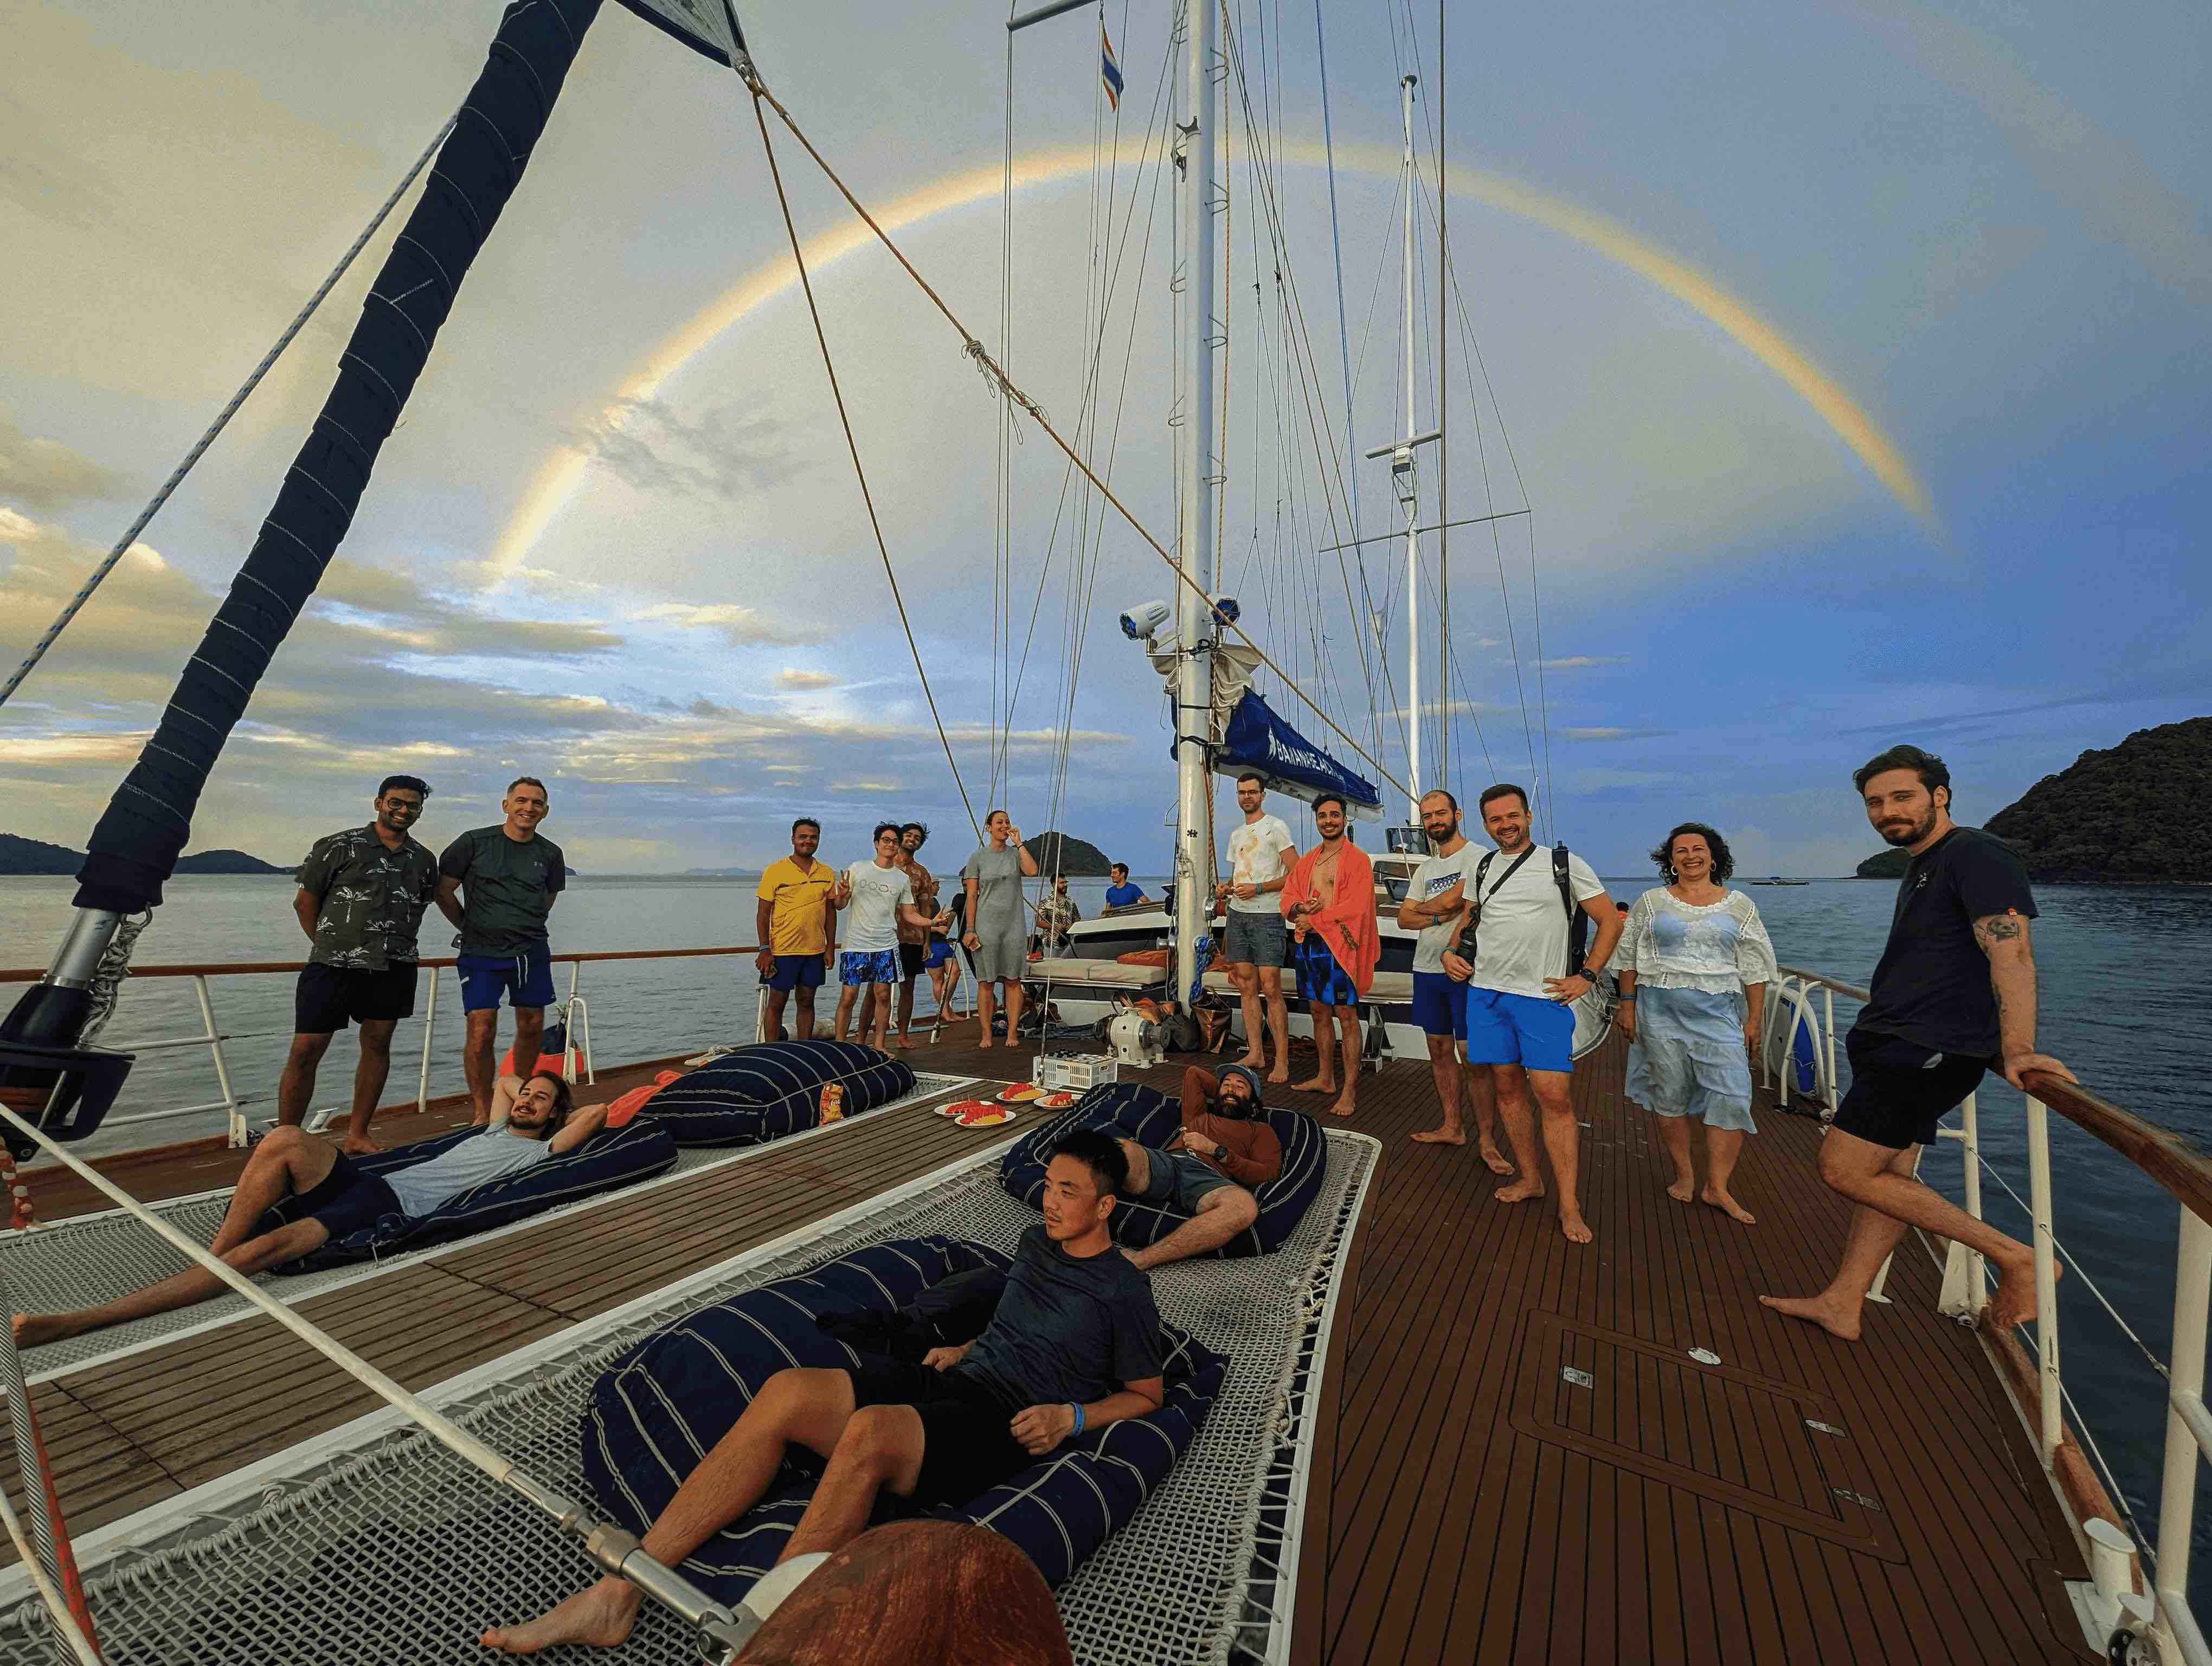 MUI team members enjoy a private catamaran trip. A rainbow appears over the team's boat.